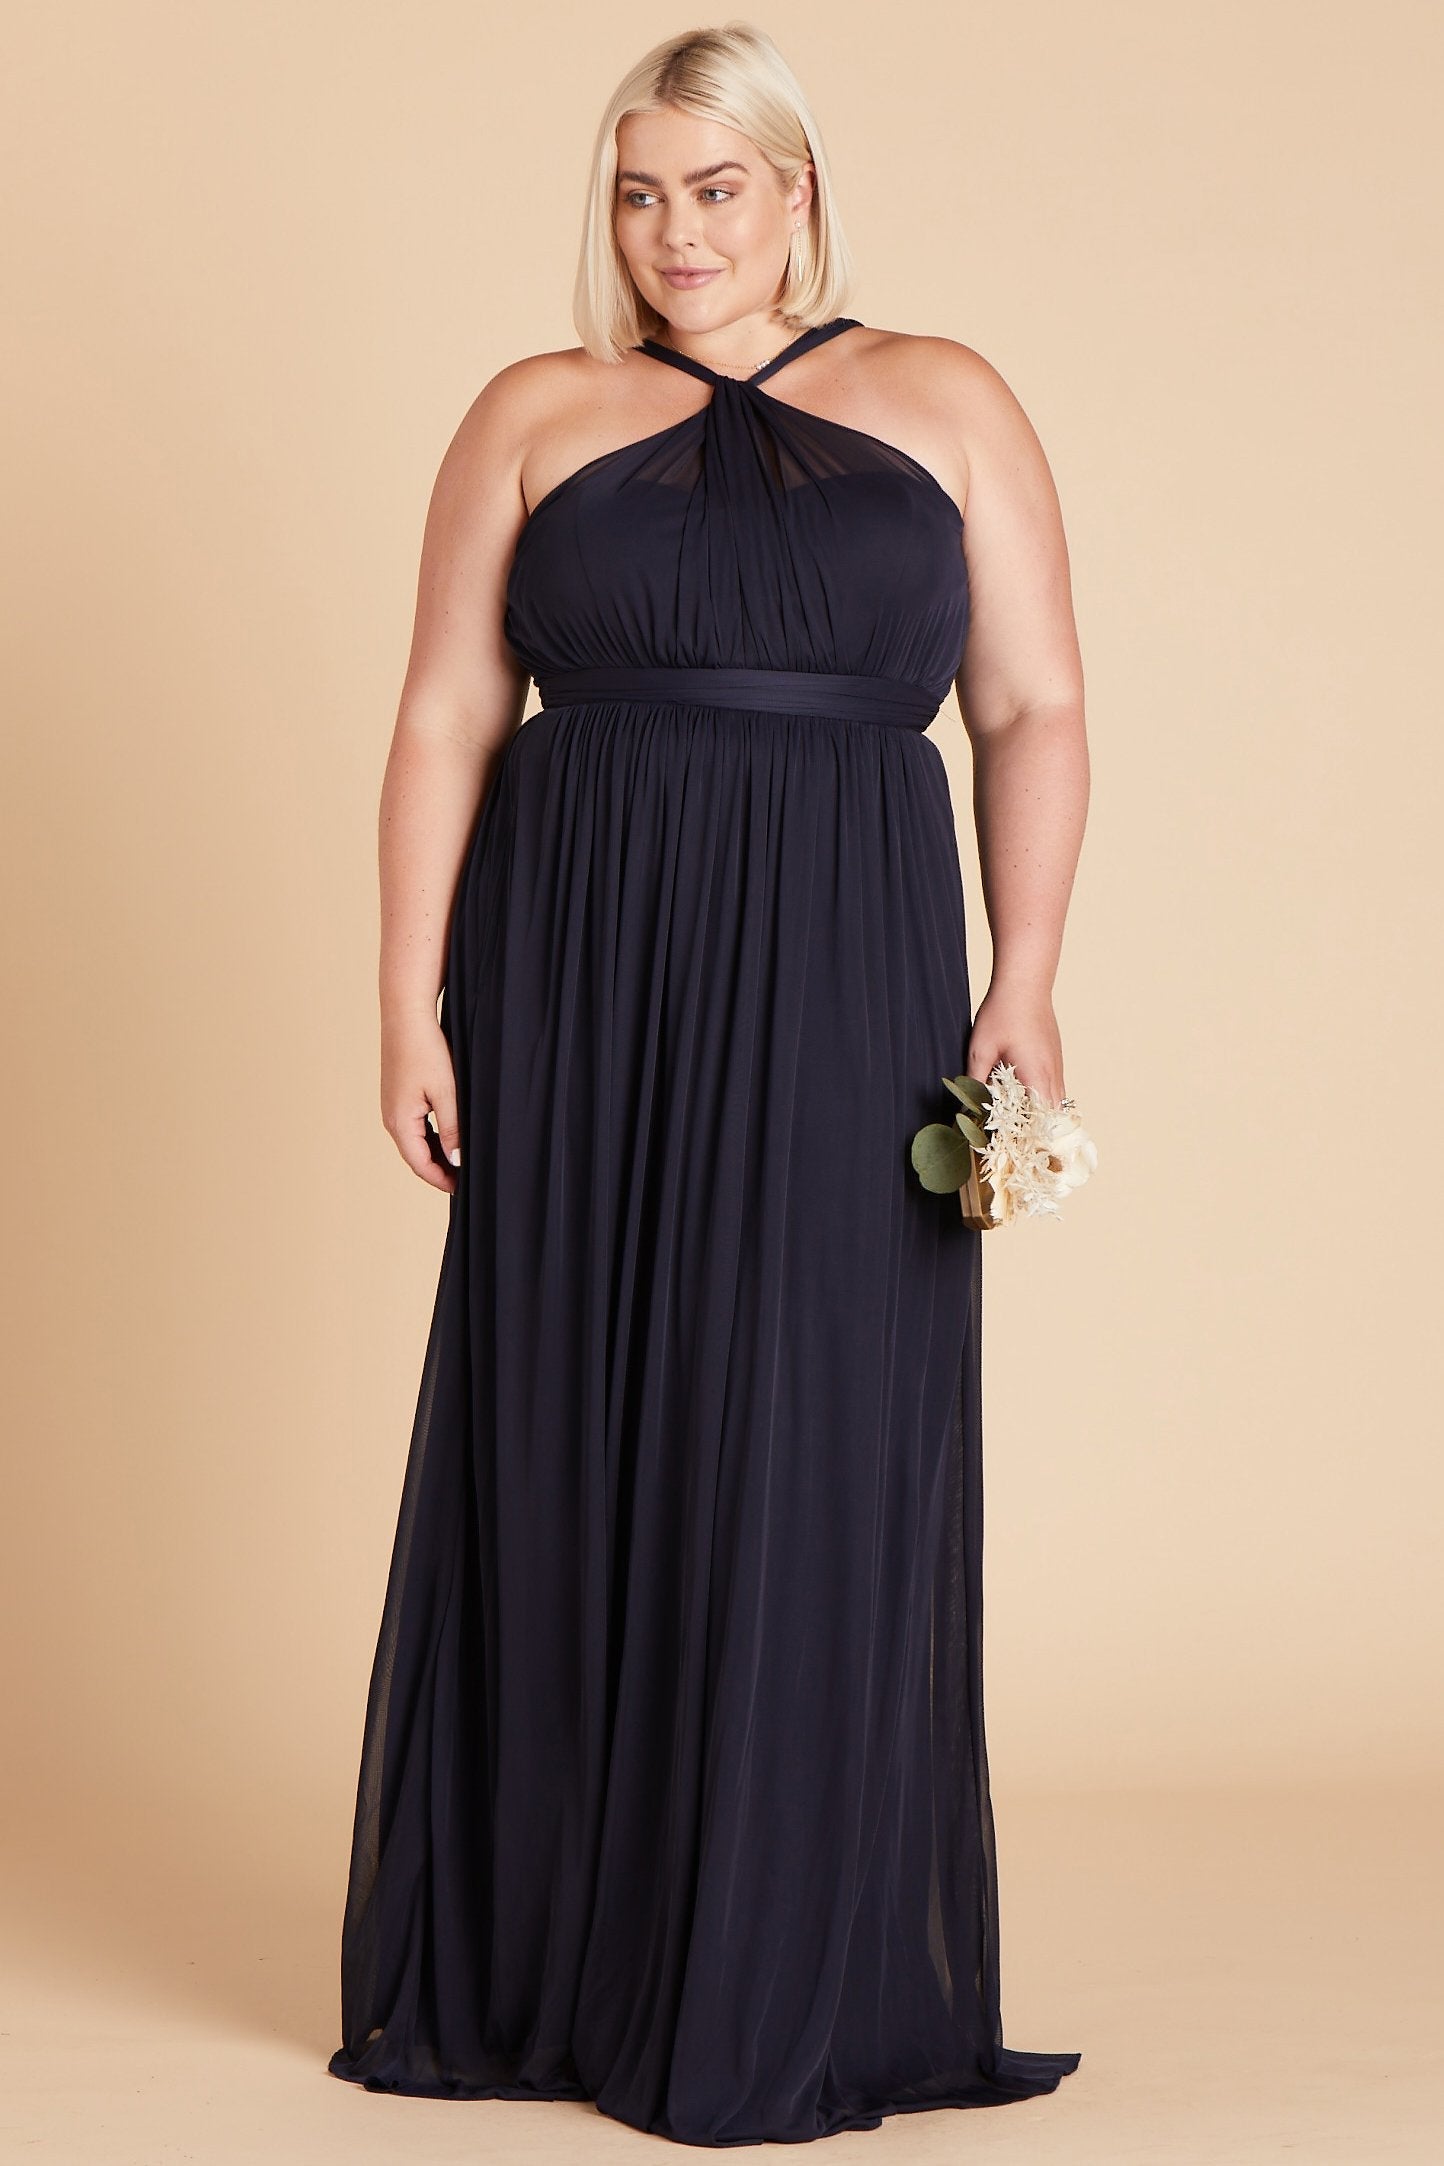 Kiko plus size bridesmaid dress in navy blue chiffon by Birdy Grey, front view